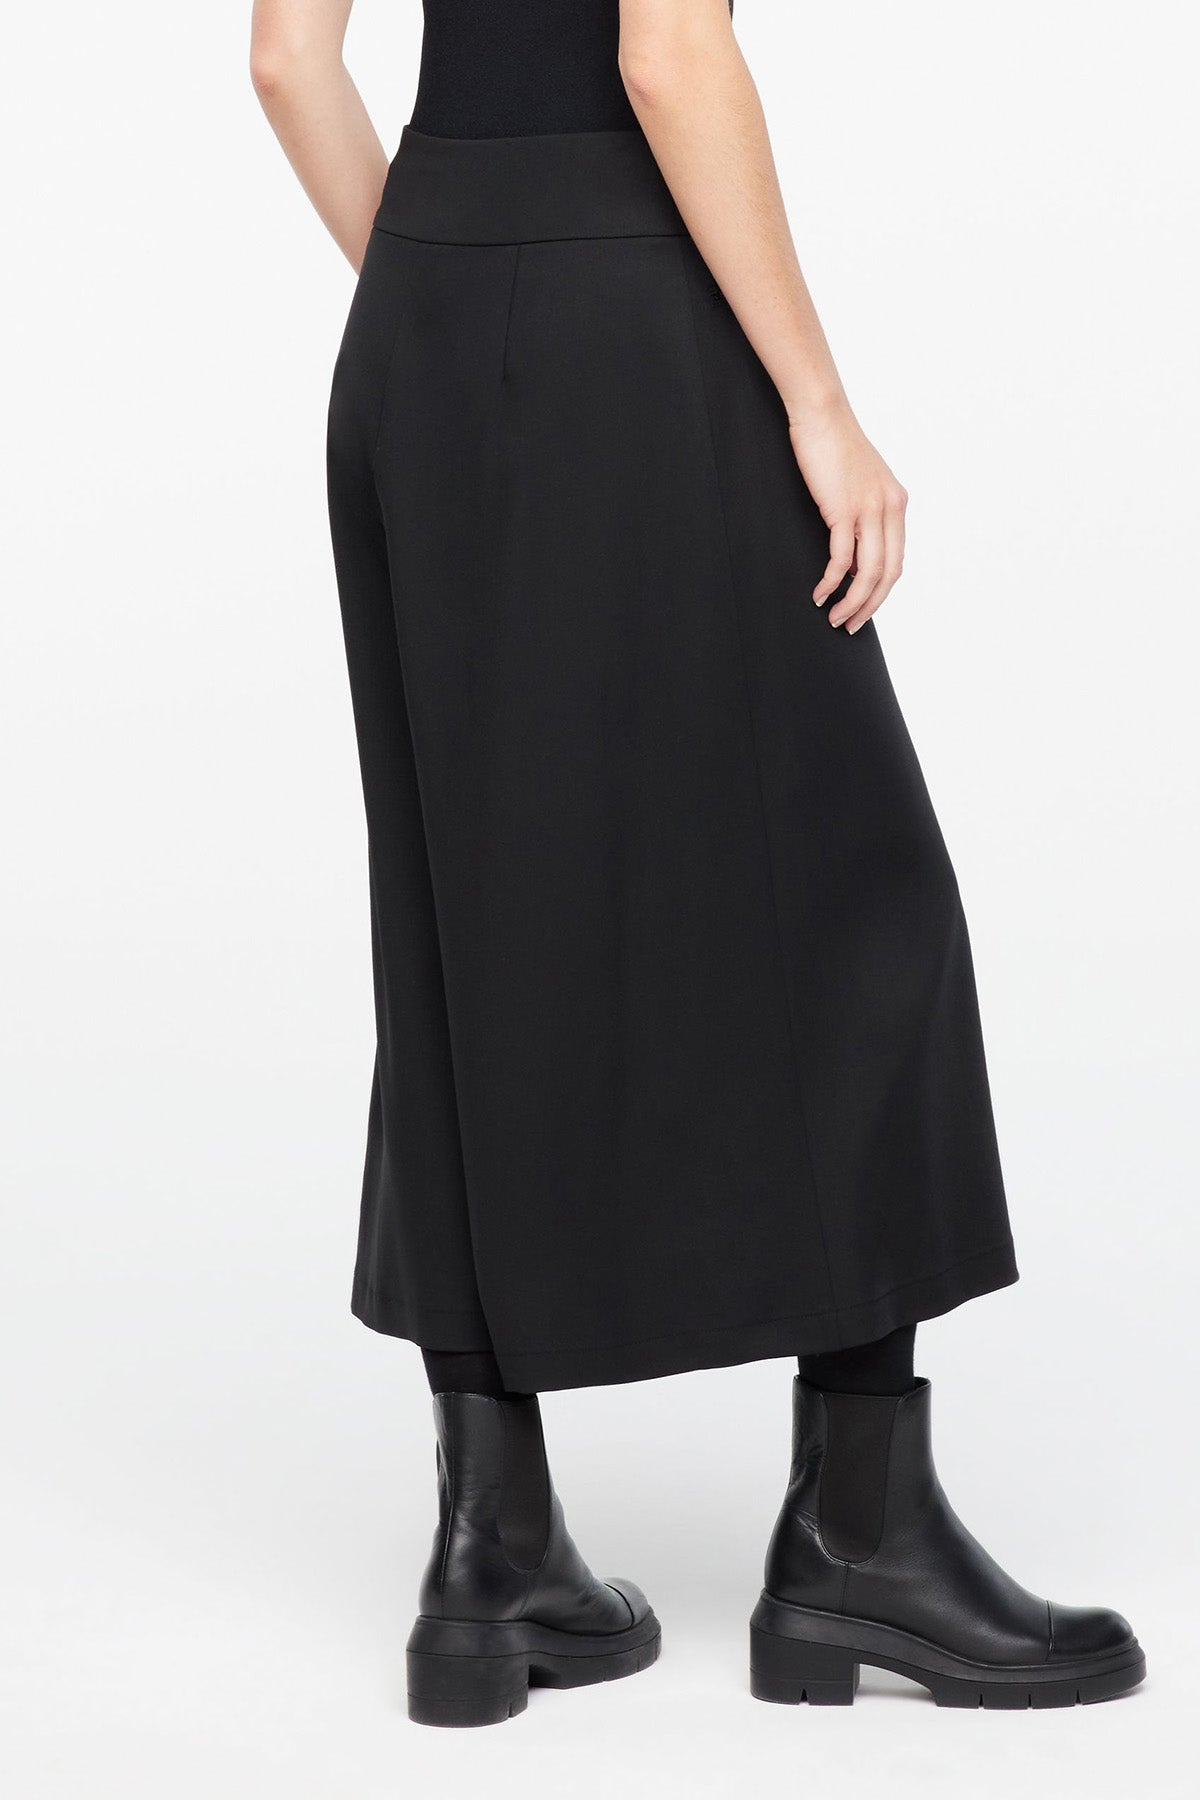 Sarah Pacini Crop Yün Pantolon-Libas Trendy Fashion Store